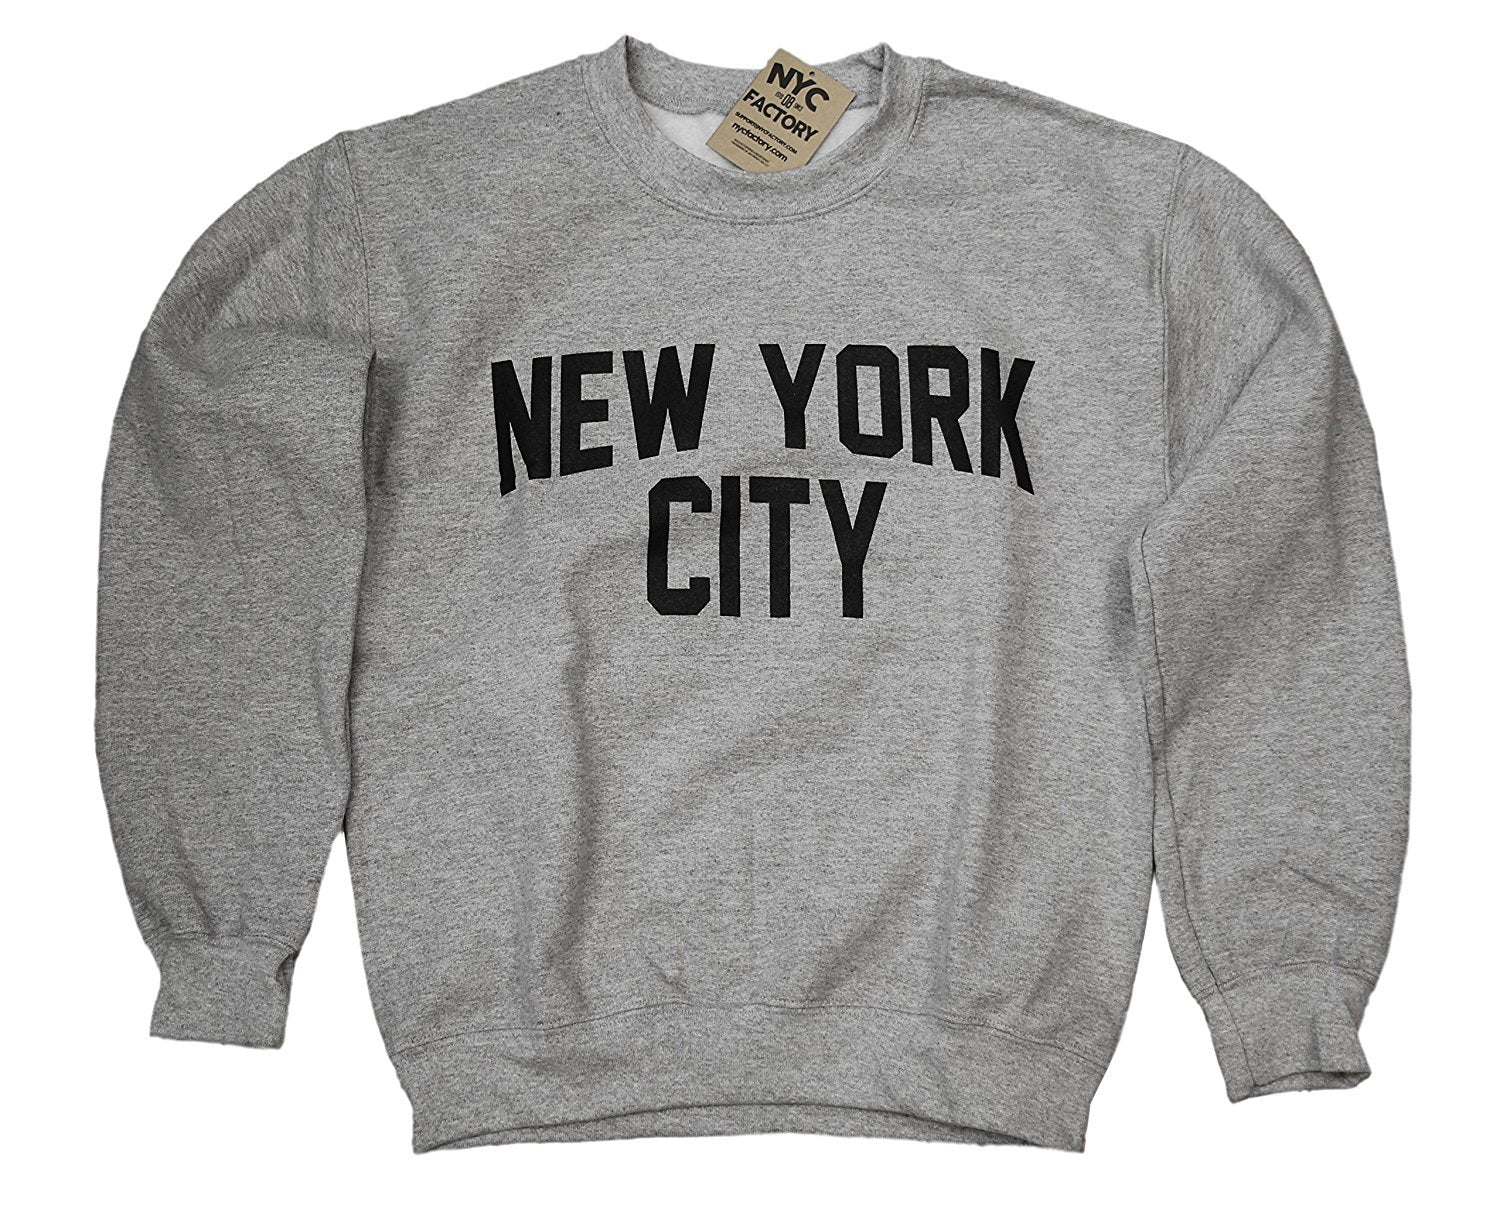 New York City Crewneck Heather Gray Screen-Printed Sweatshirt Lennon